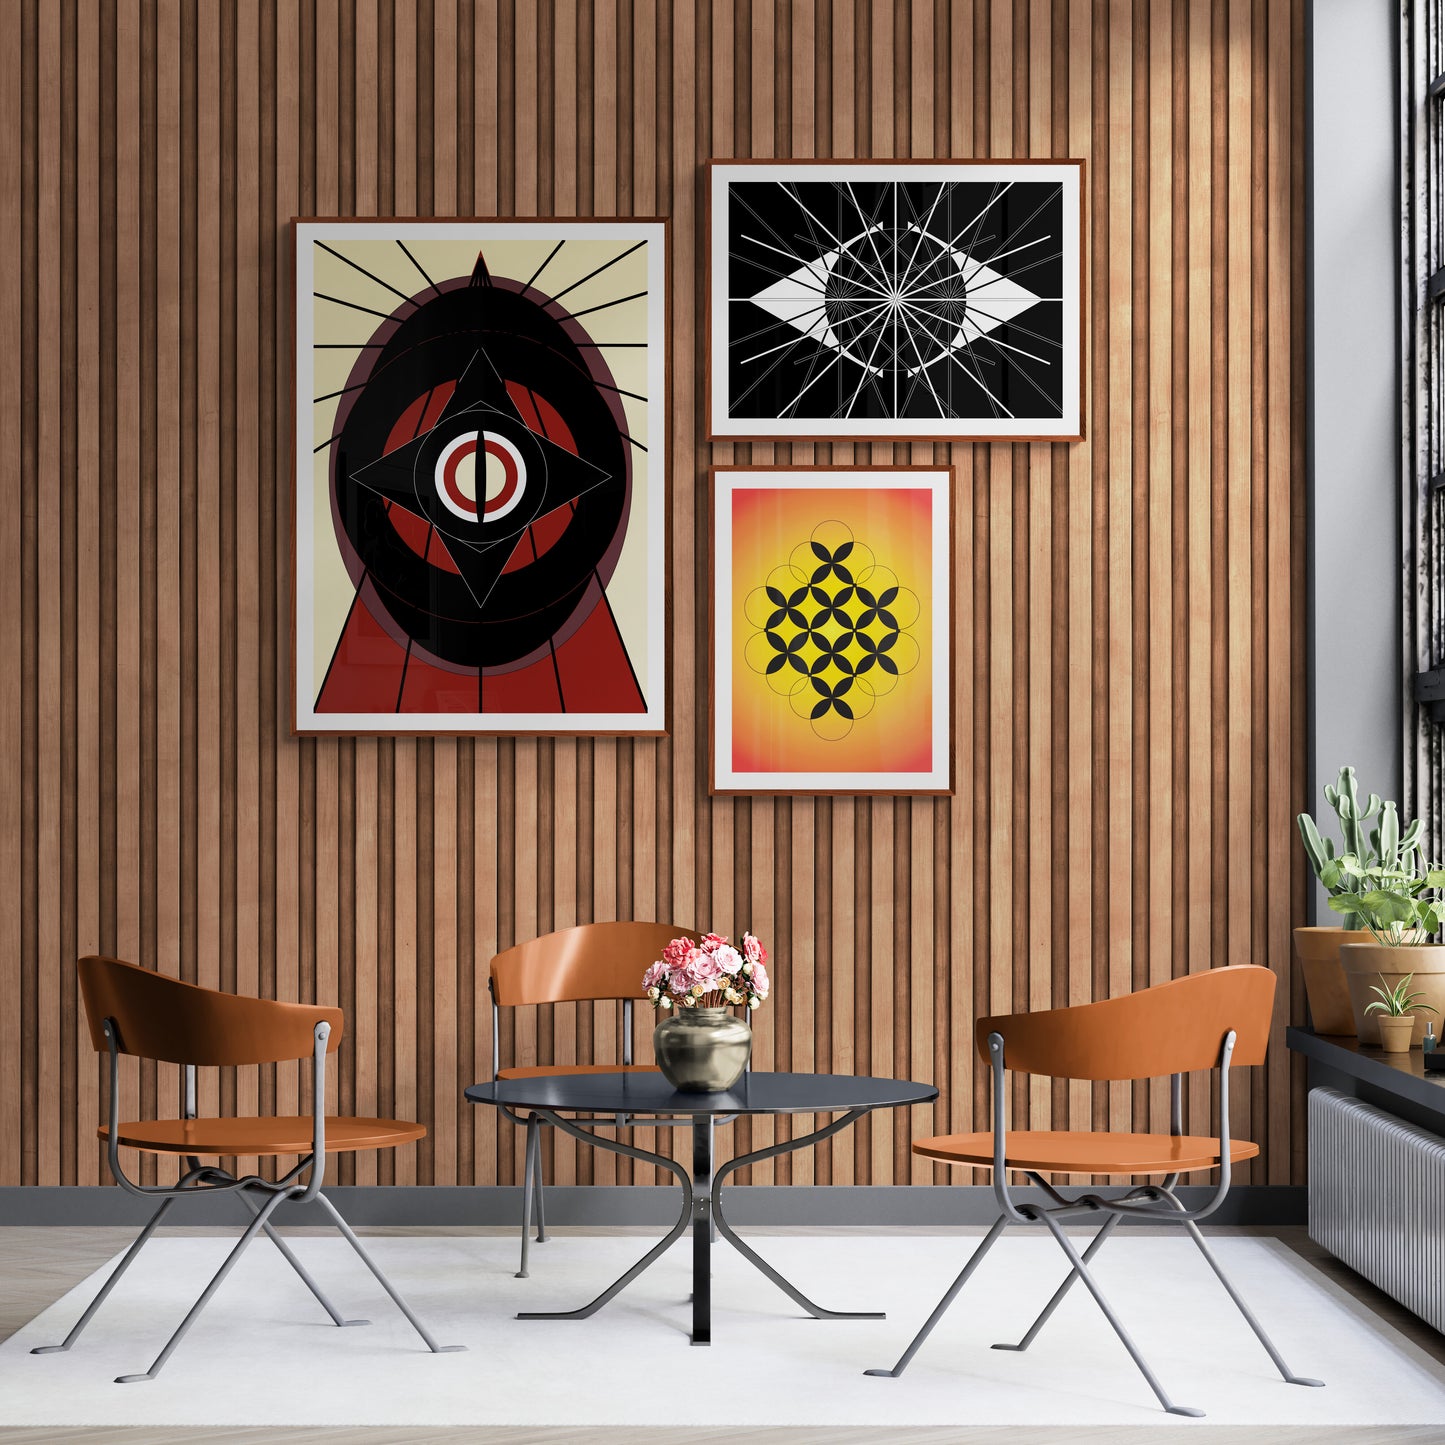 Wall art poster contemporary graphic design art work abstract, physical item prints Bauhaus inspired Scandinavian Swedish interior design